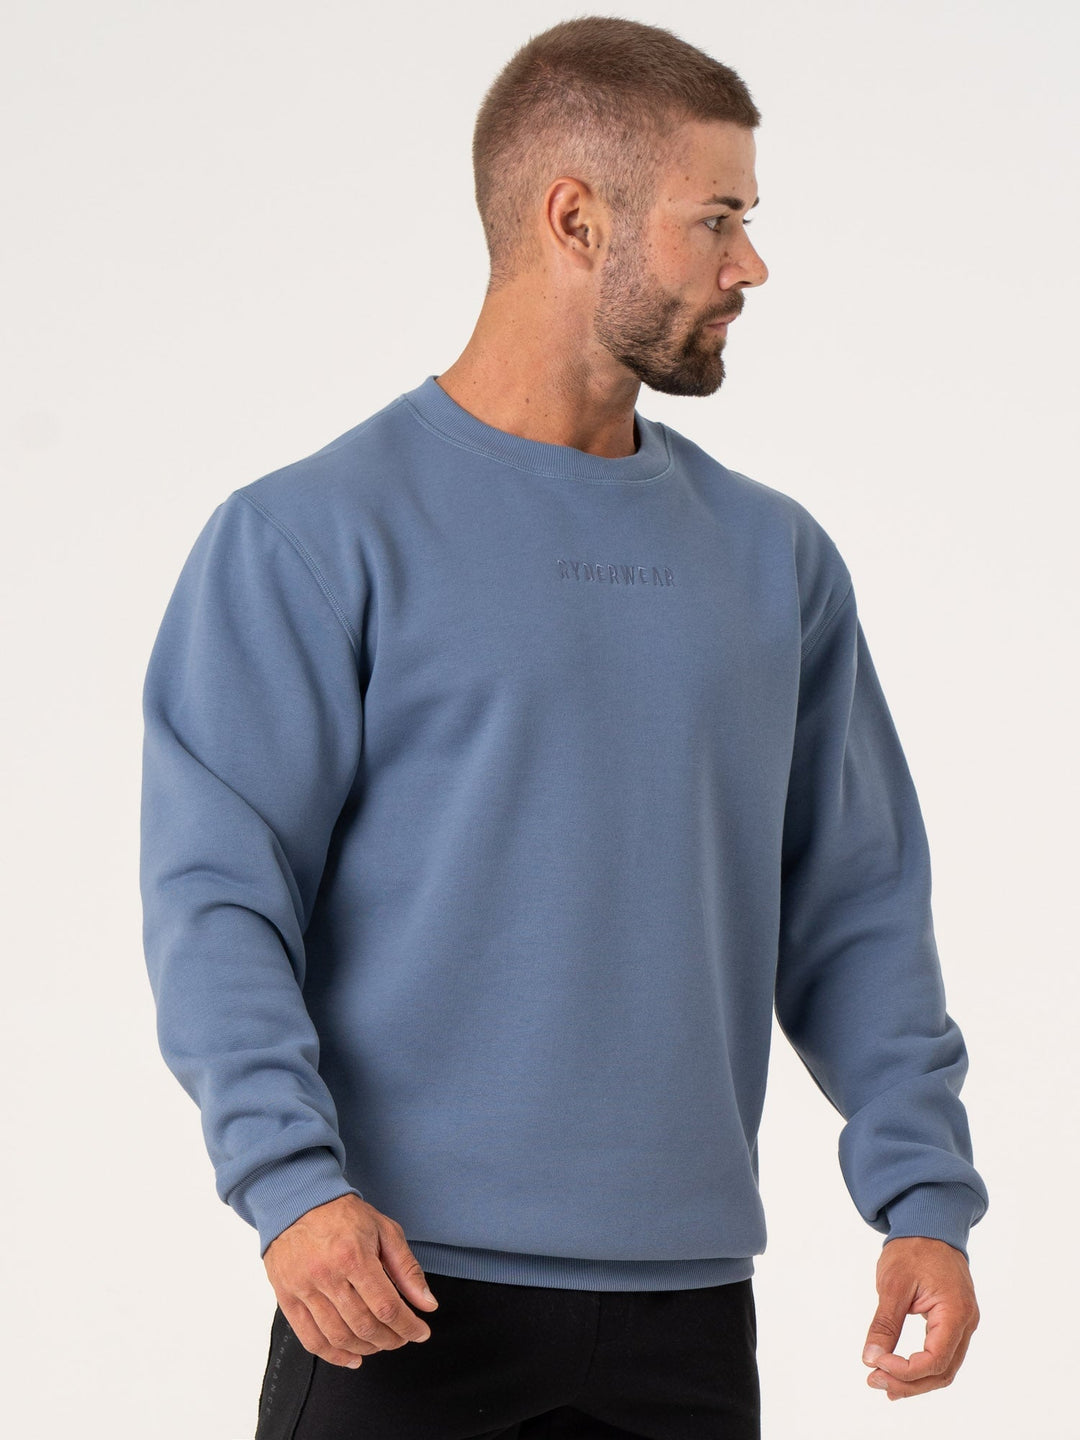 Pursuit Pullover - Denim Blue Clothing Ryderwear 